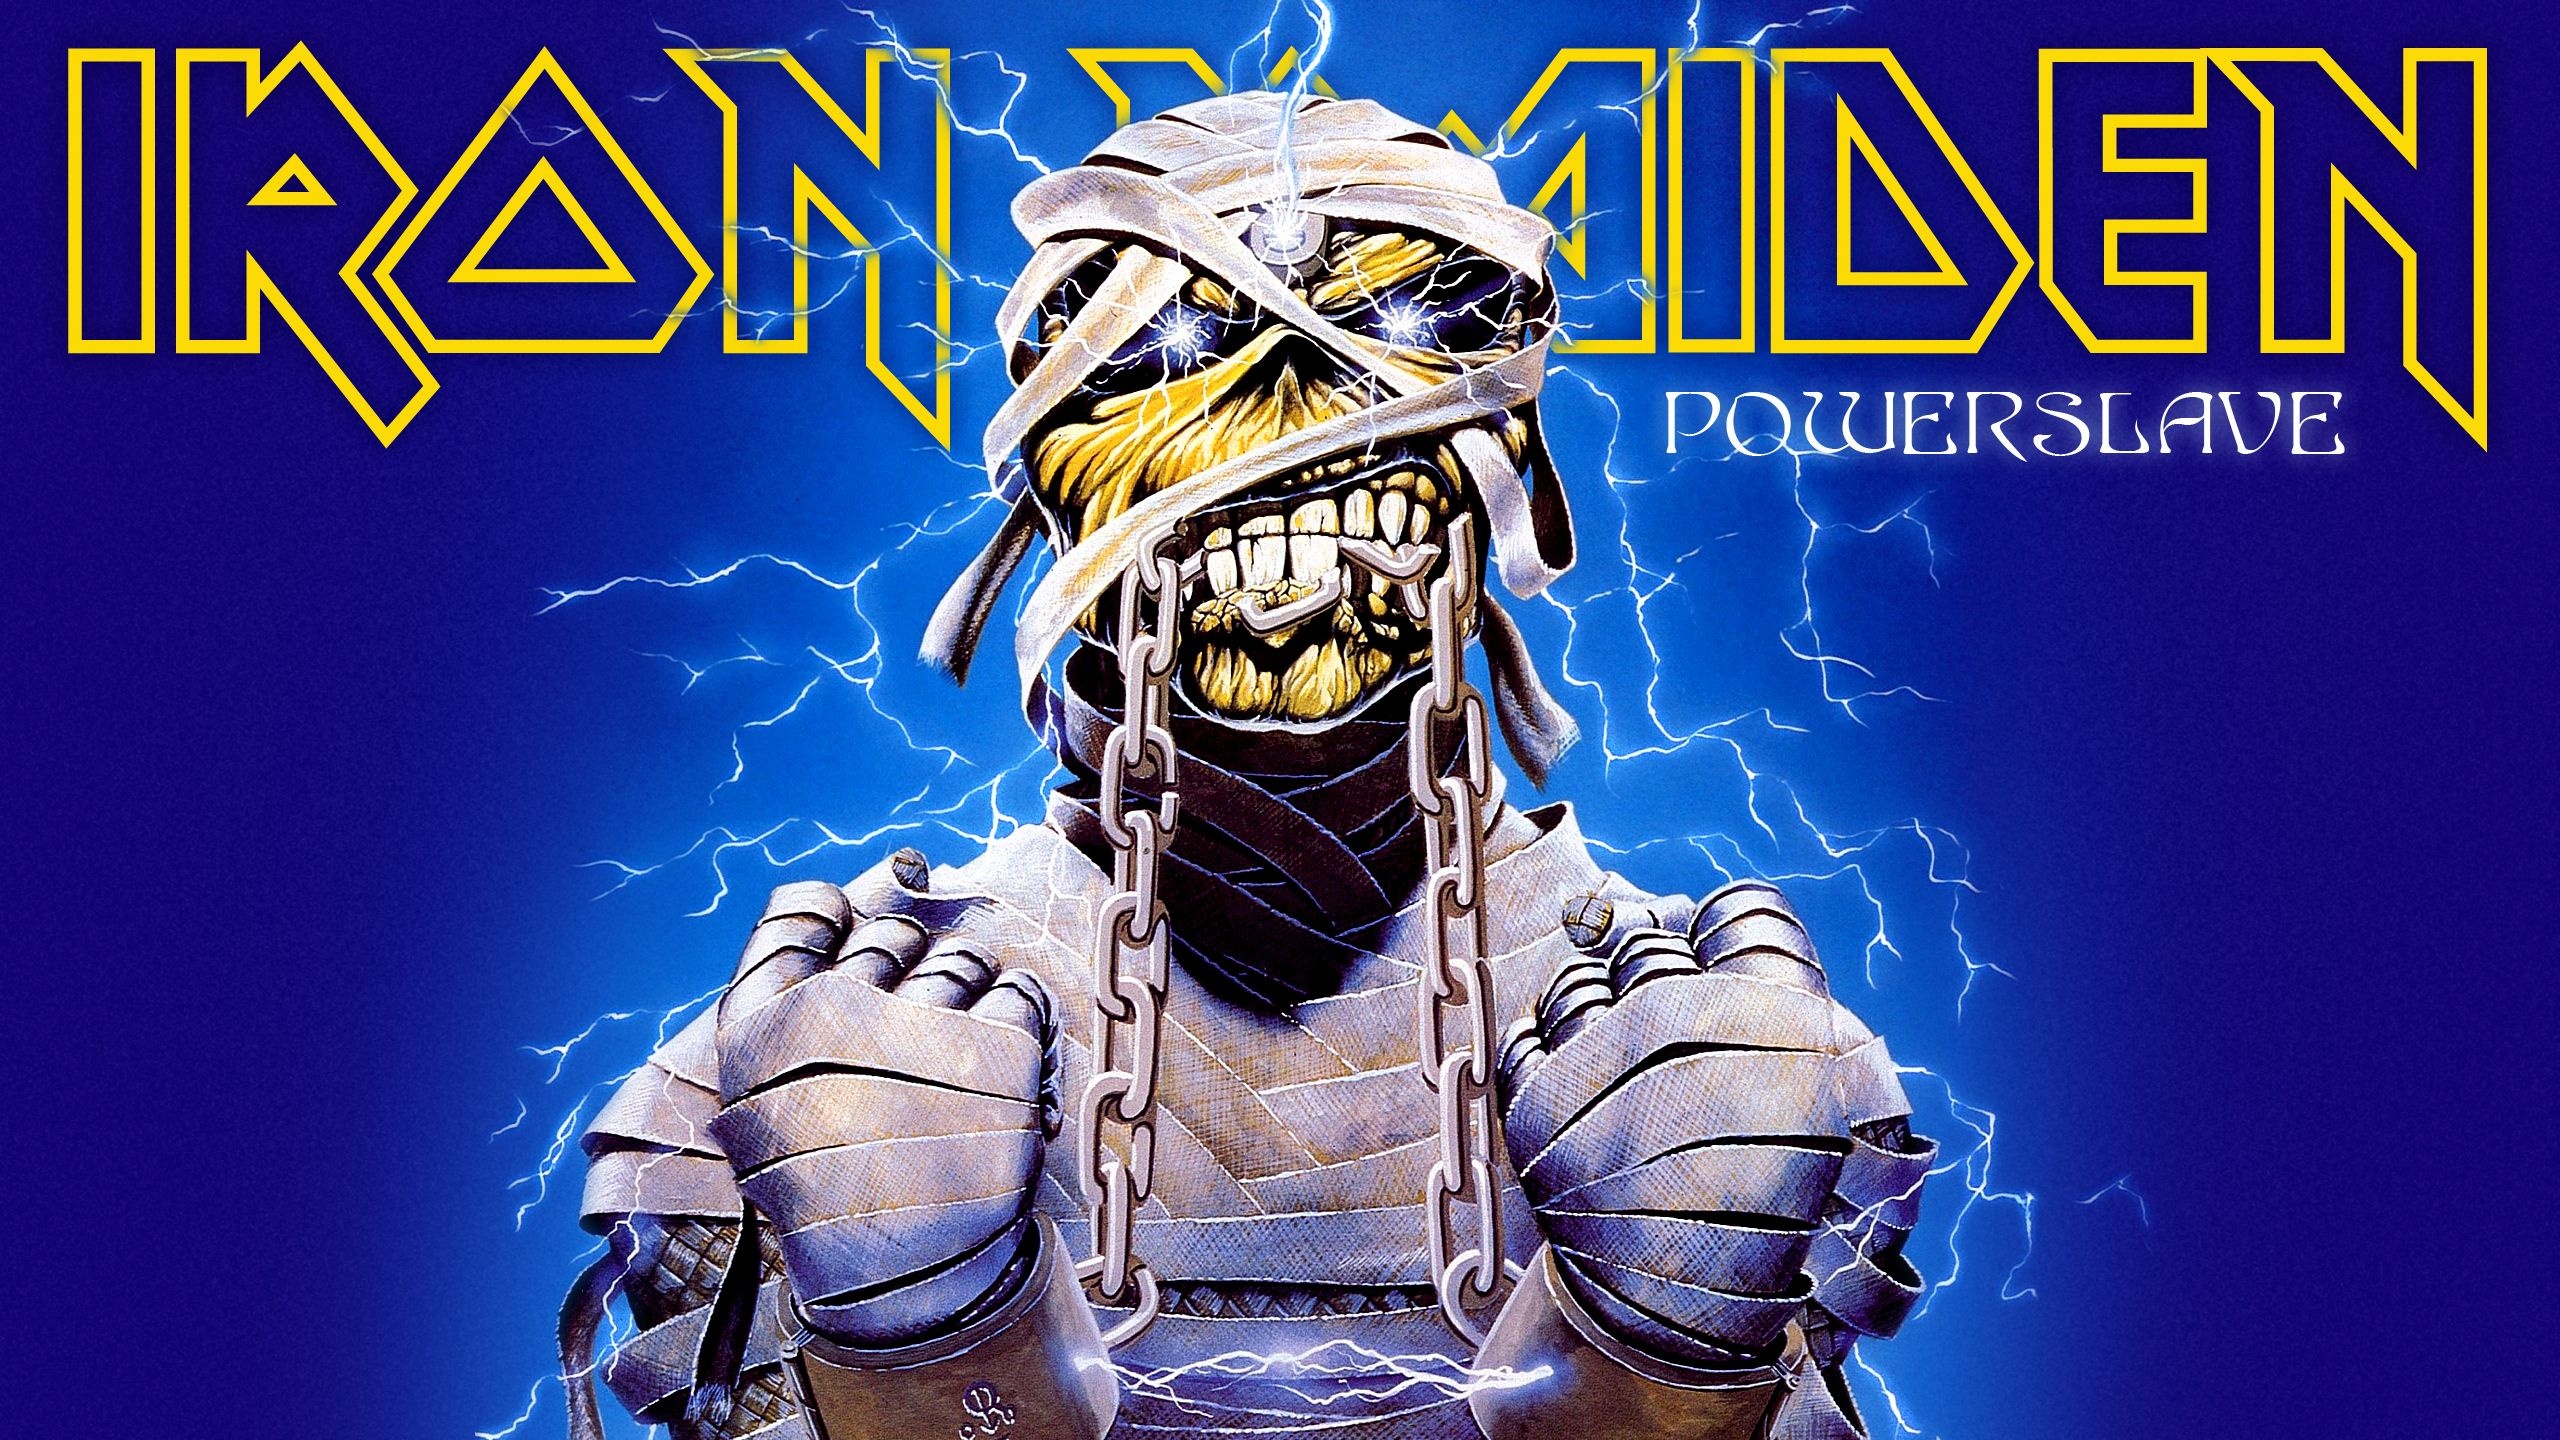 Iron Maiden Band Music, Powerslave album, Historical themes, Egyptian mythology, 2560x1440 HD Desktop